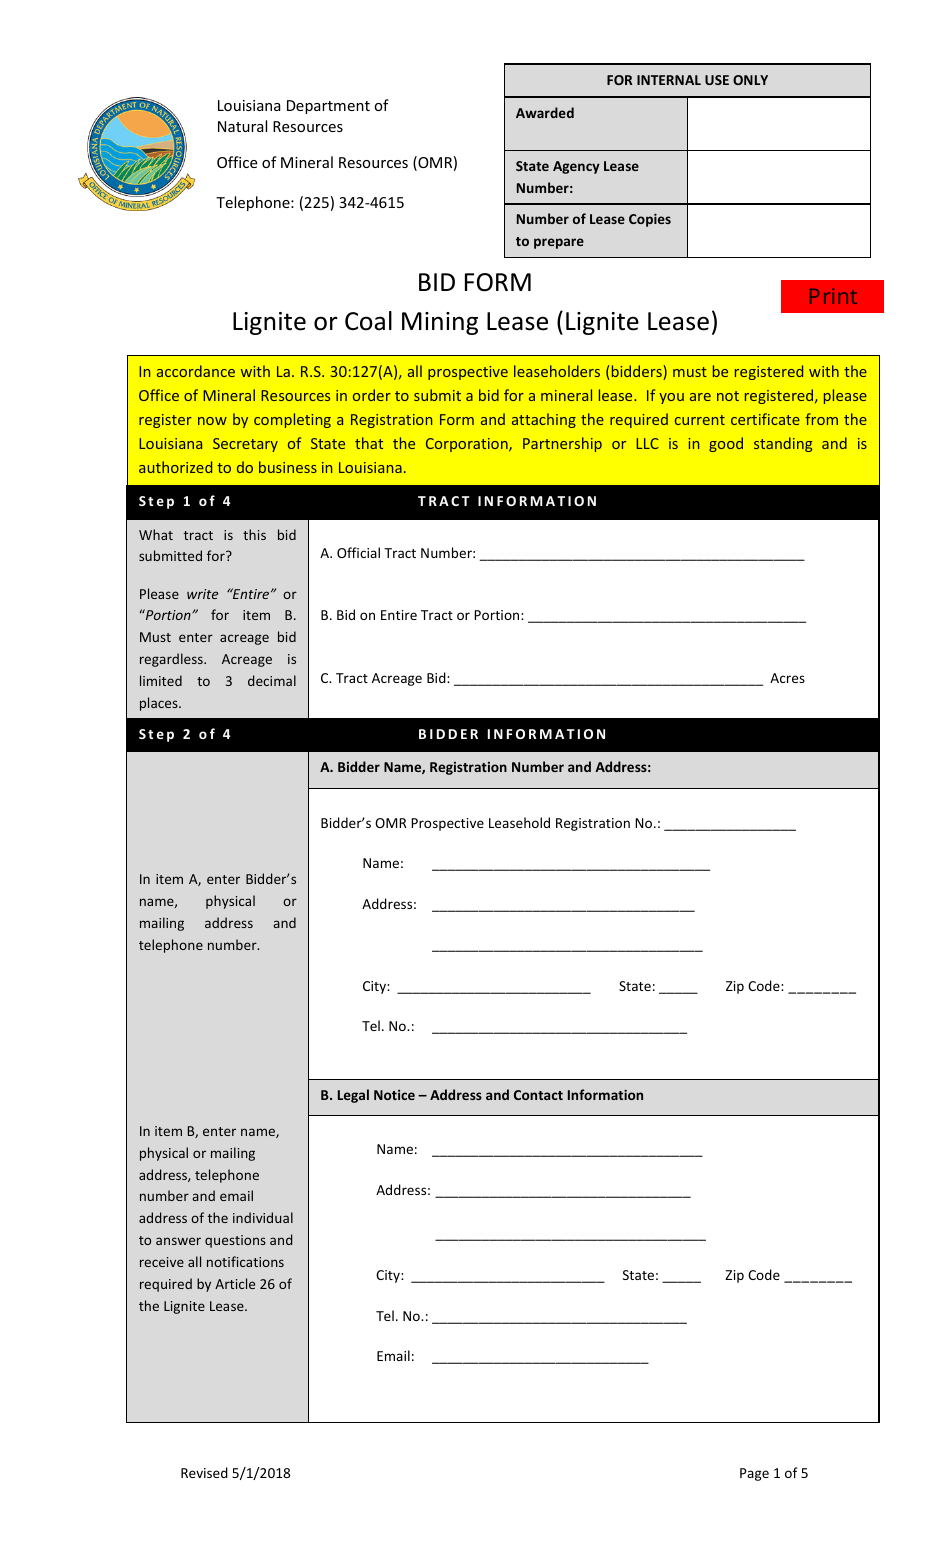 Bid Form for Lignite or Coal Mining Lease (Lignite Lease) - Louisiana, Page 1